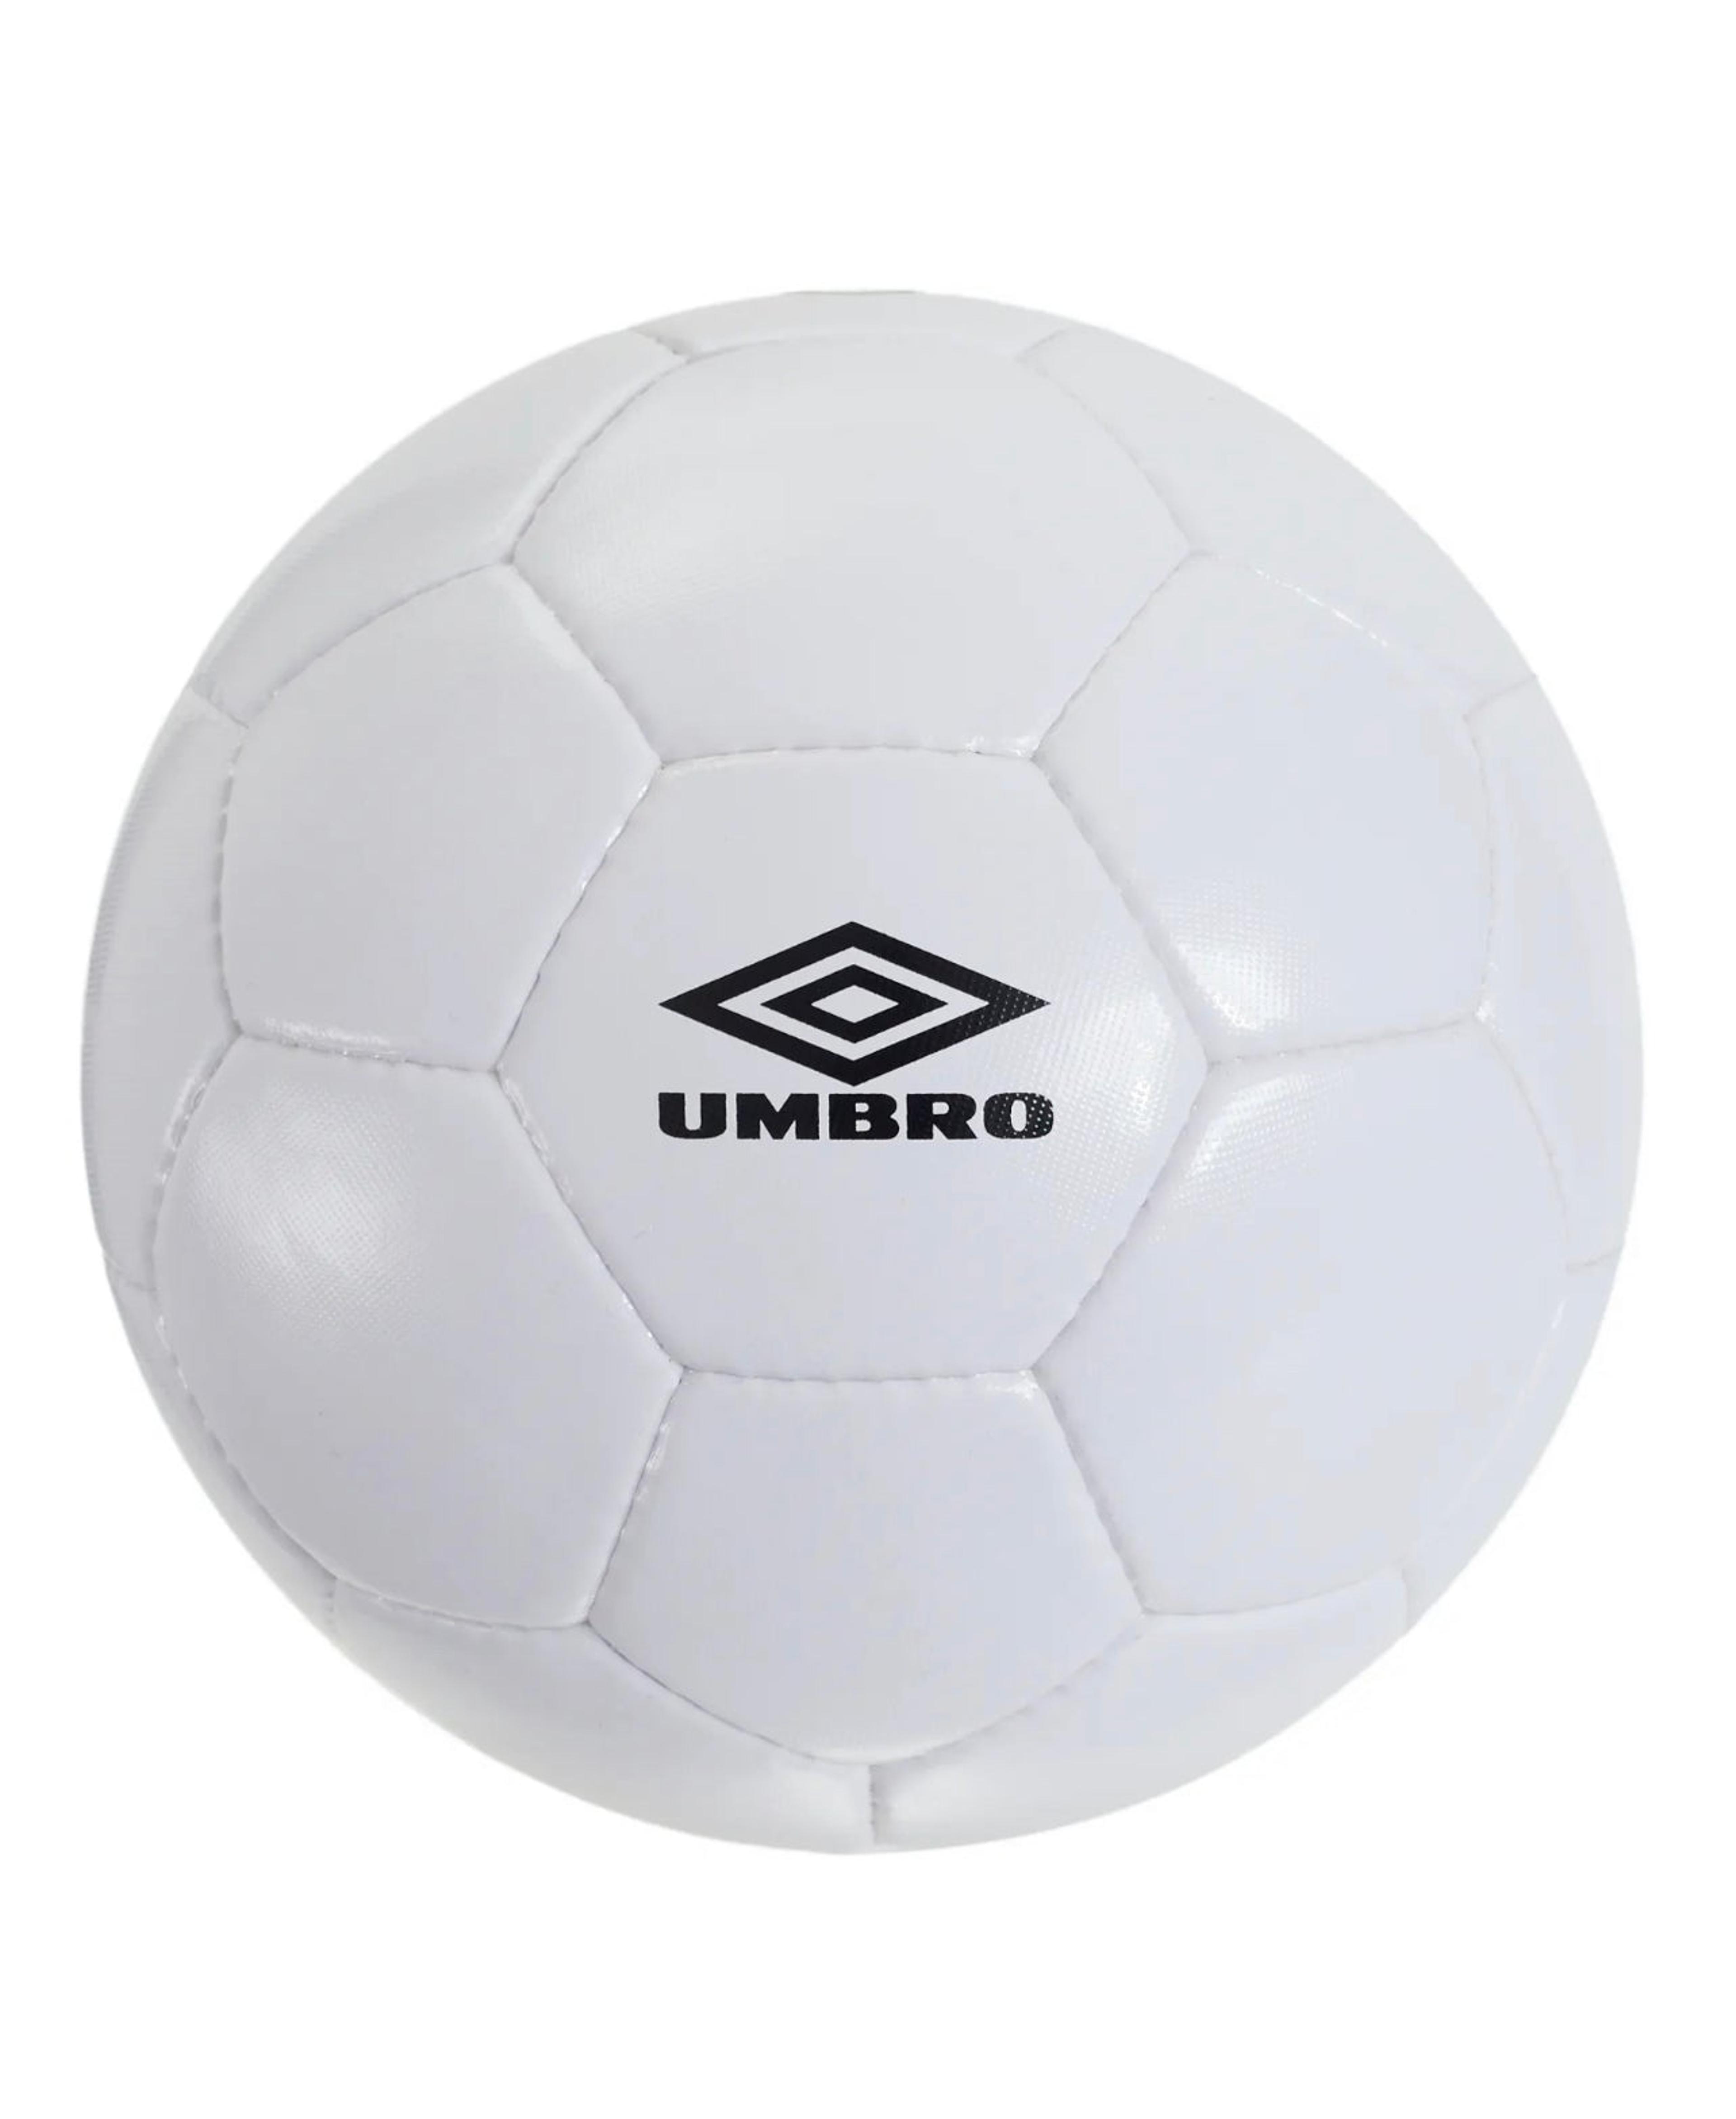 Alternate View 1 of Supreme x Umbro Soccer Ball